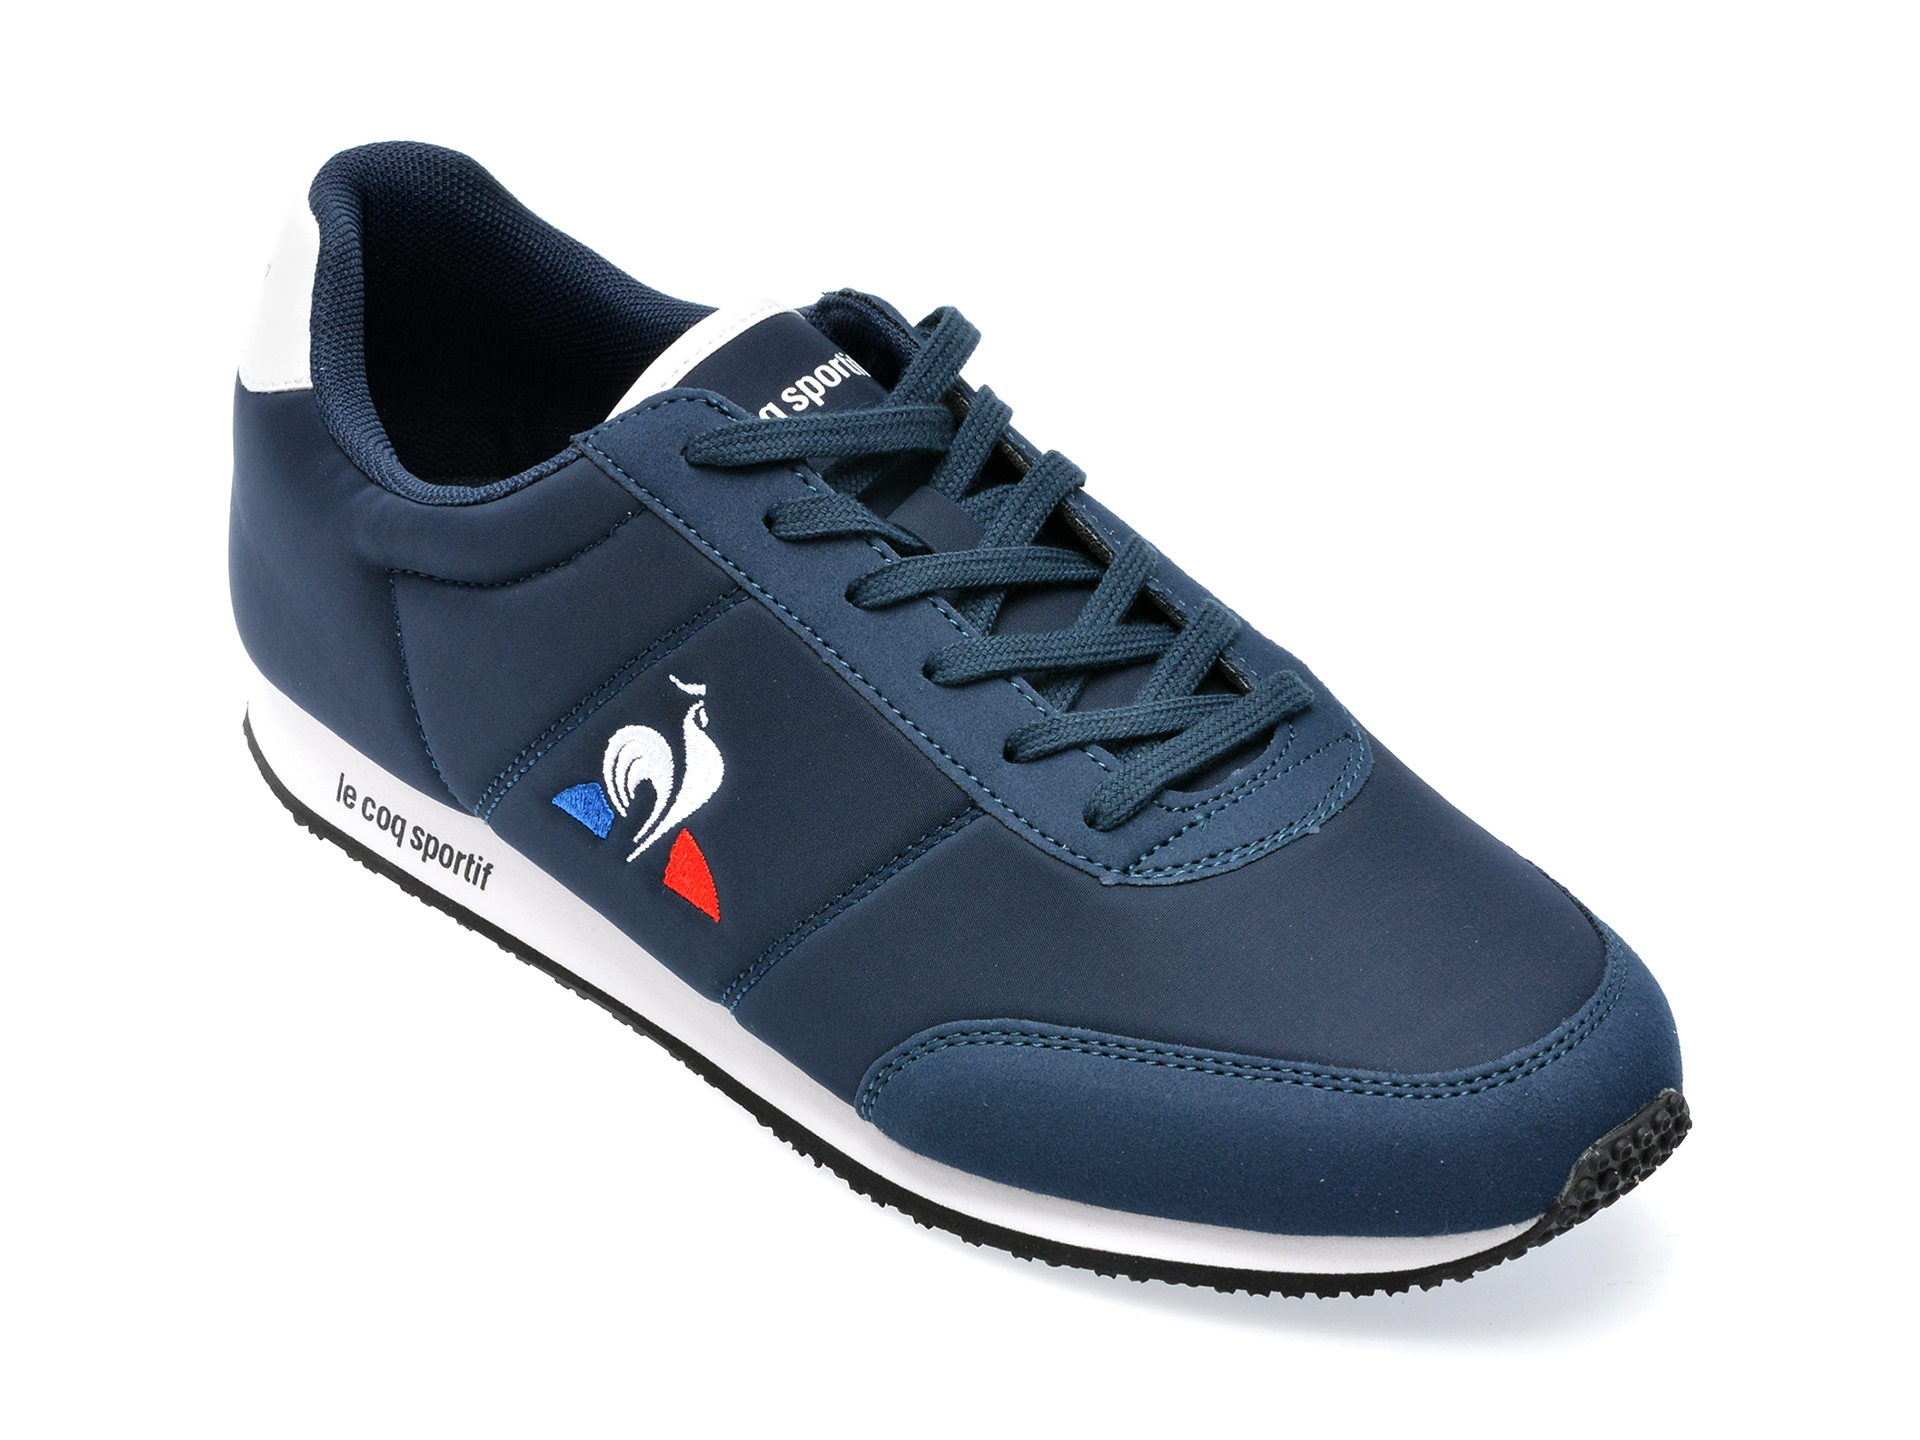 Pantofi LE COQ SPORTIF albastri, 2310311, din material textil /barbati/pantofi